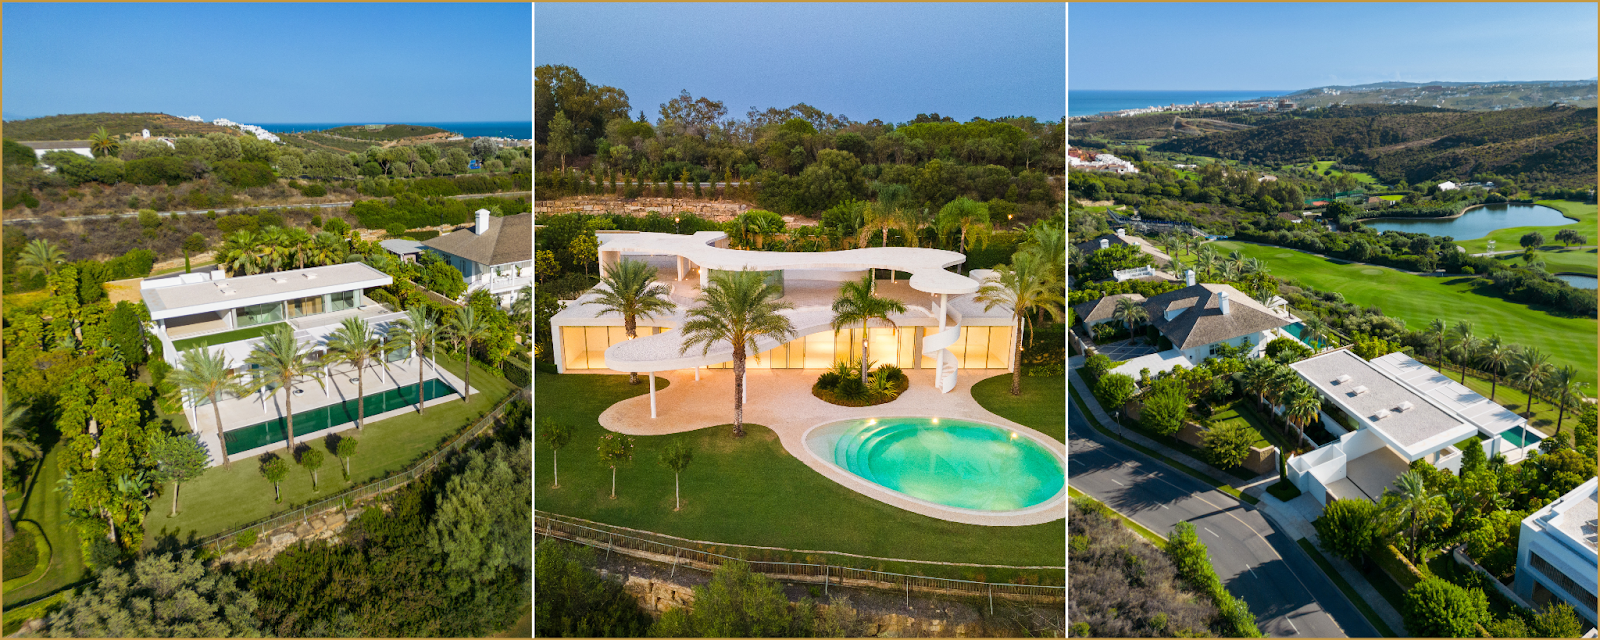 Finca Cortesin villas de luxe à vendre Hansson Hertzell immobilier à Casares Costa del Sol